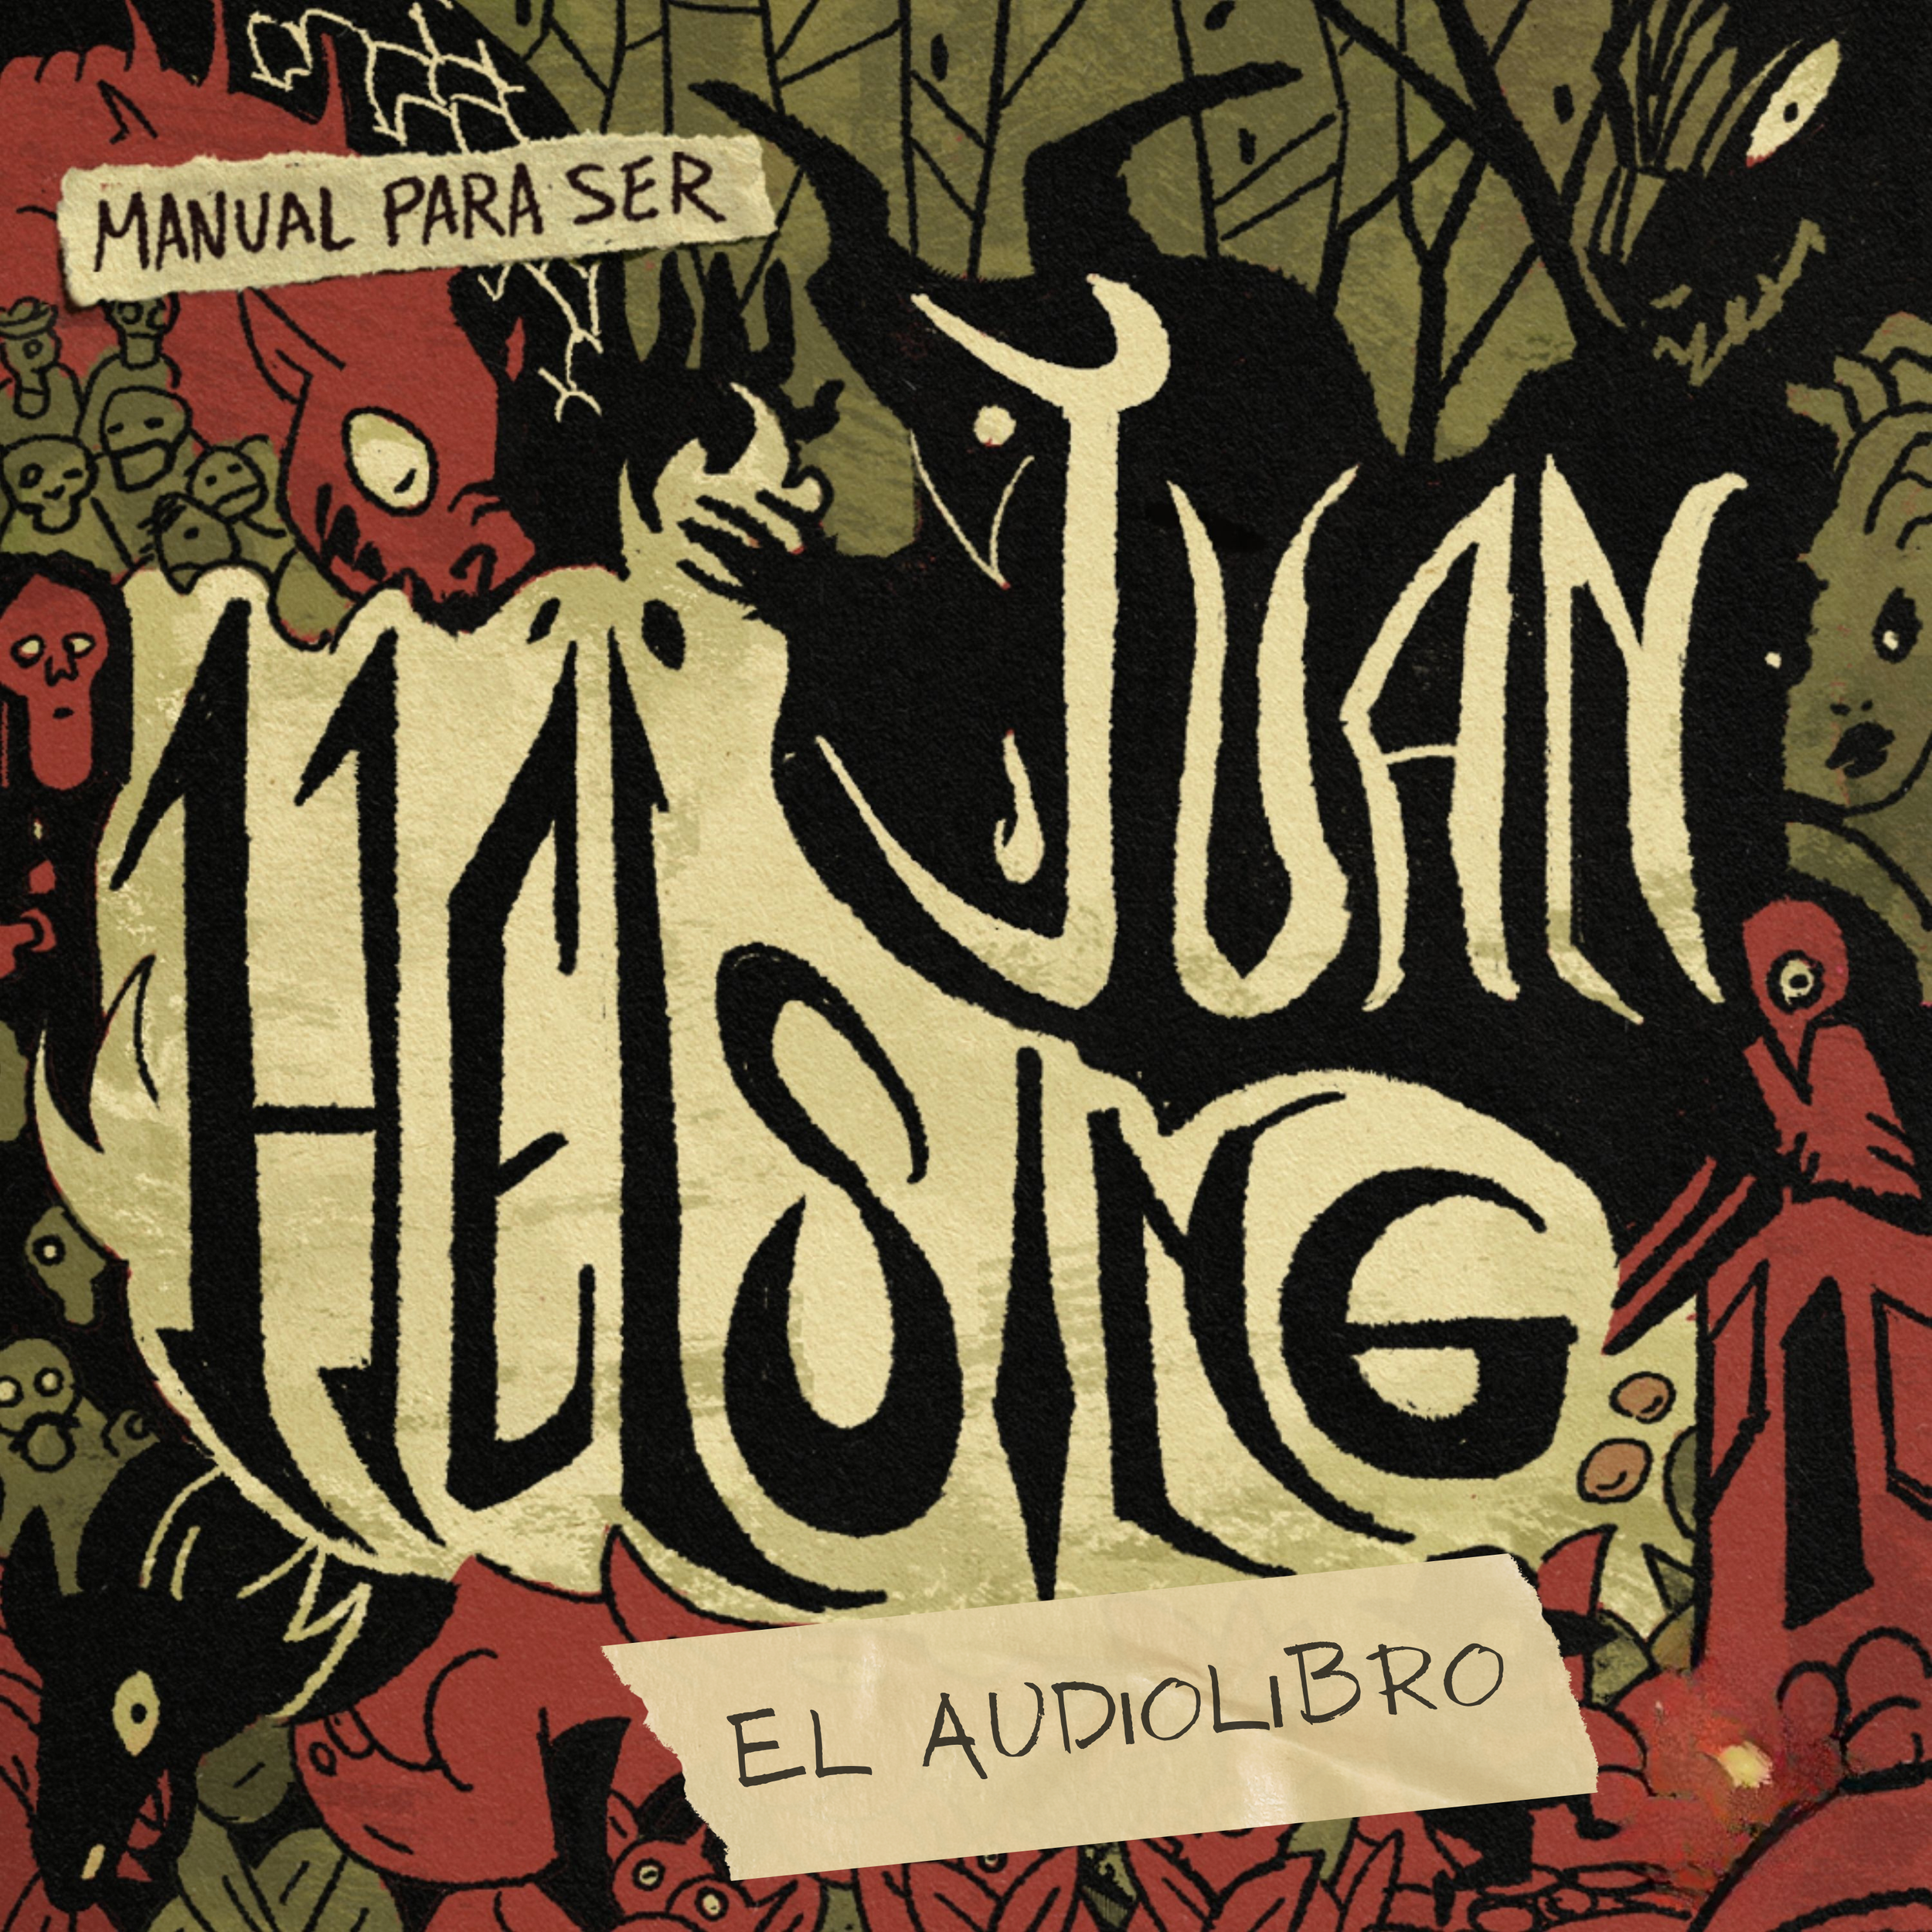 Juan-helsing-asdbk-cover